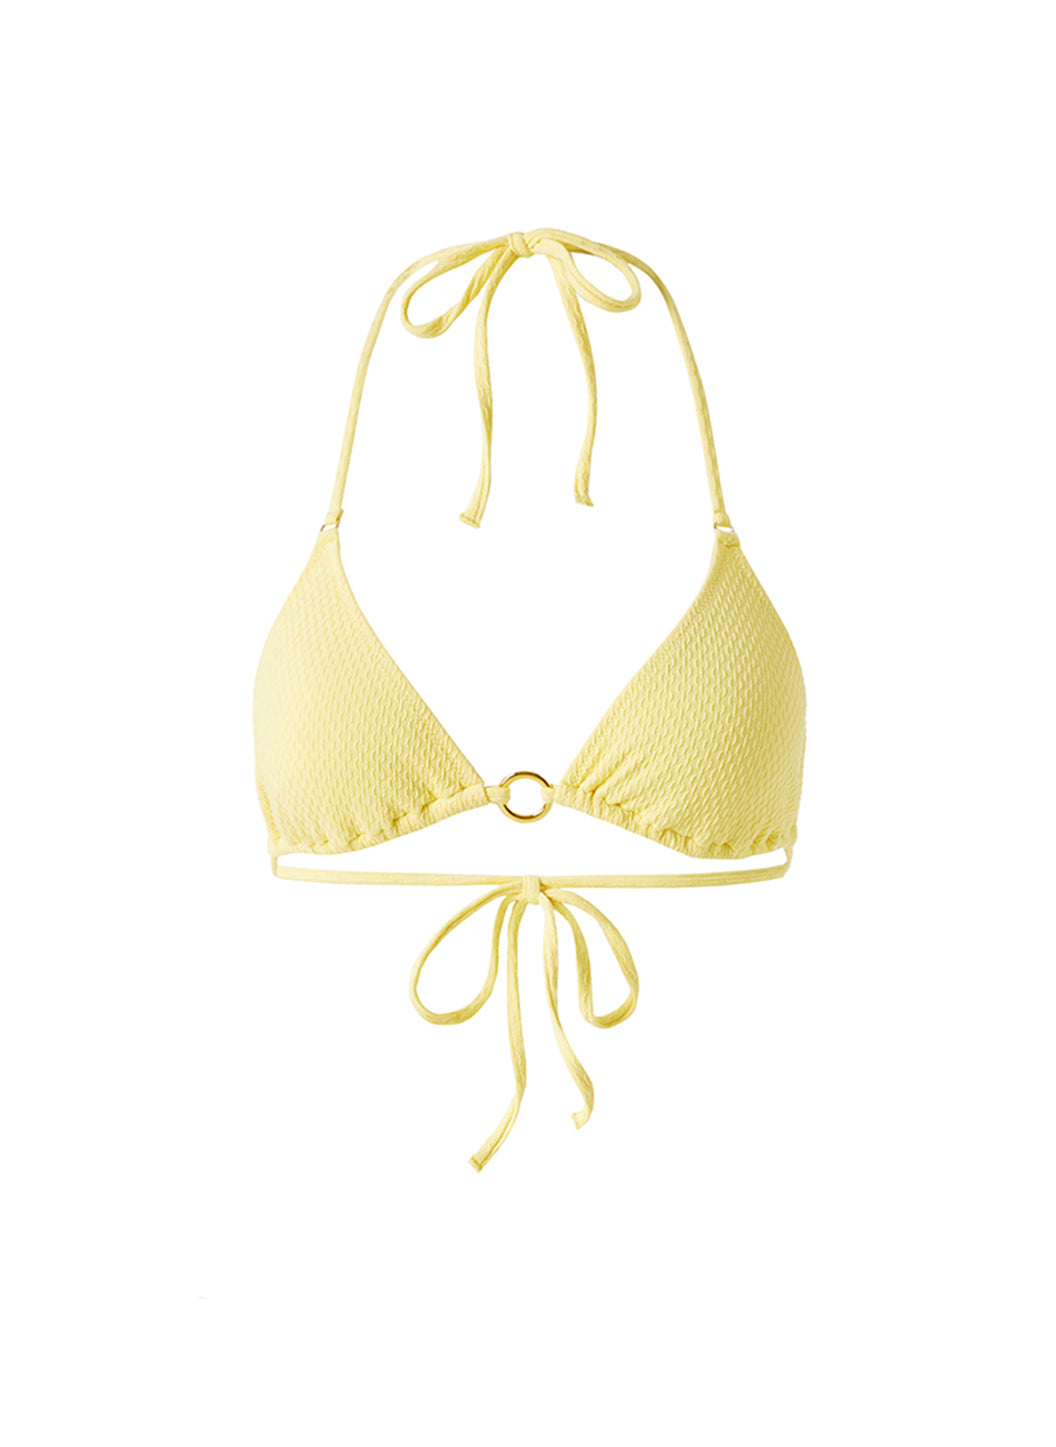 Venice Yellow Textured Bikini Top Cutout